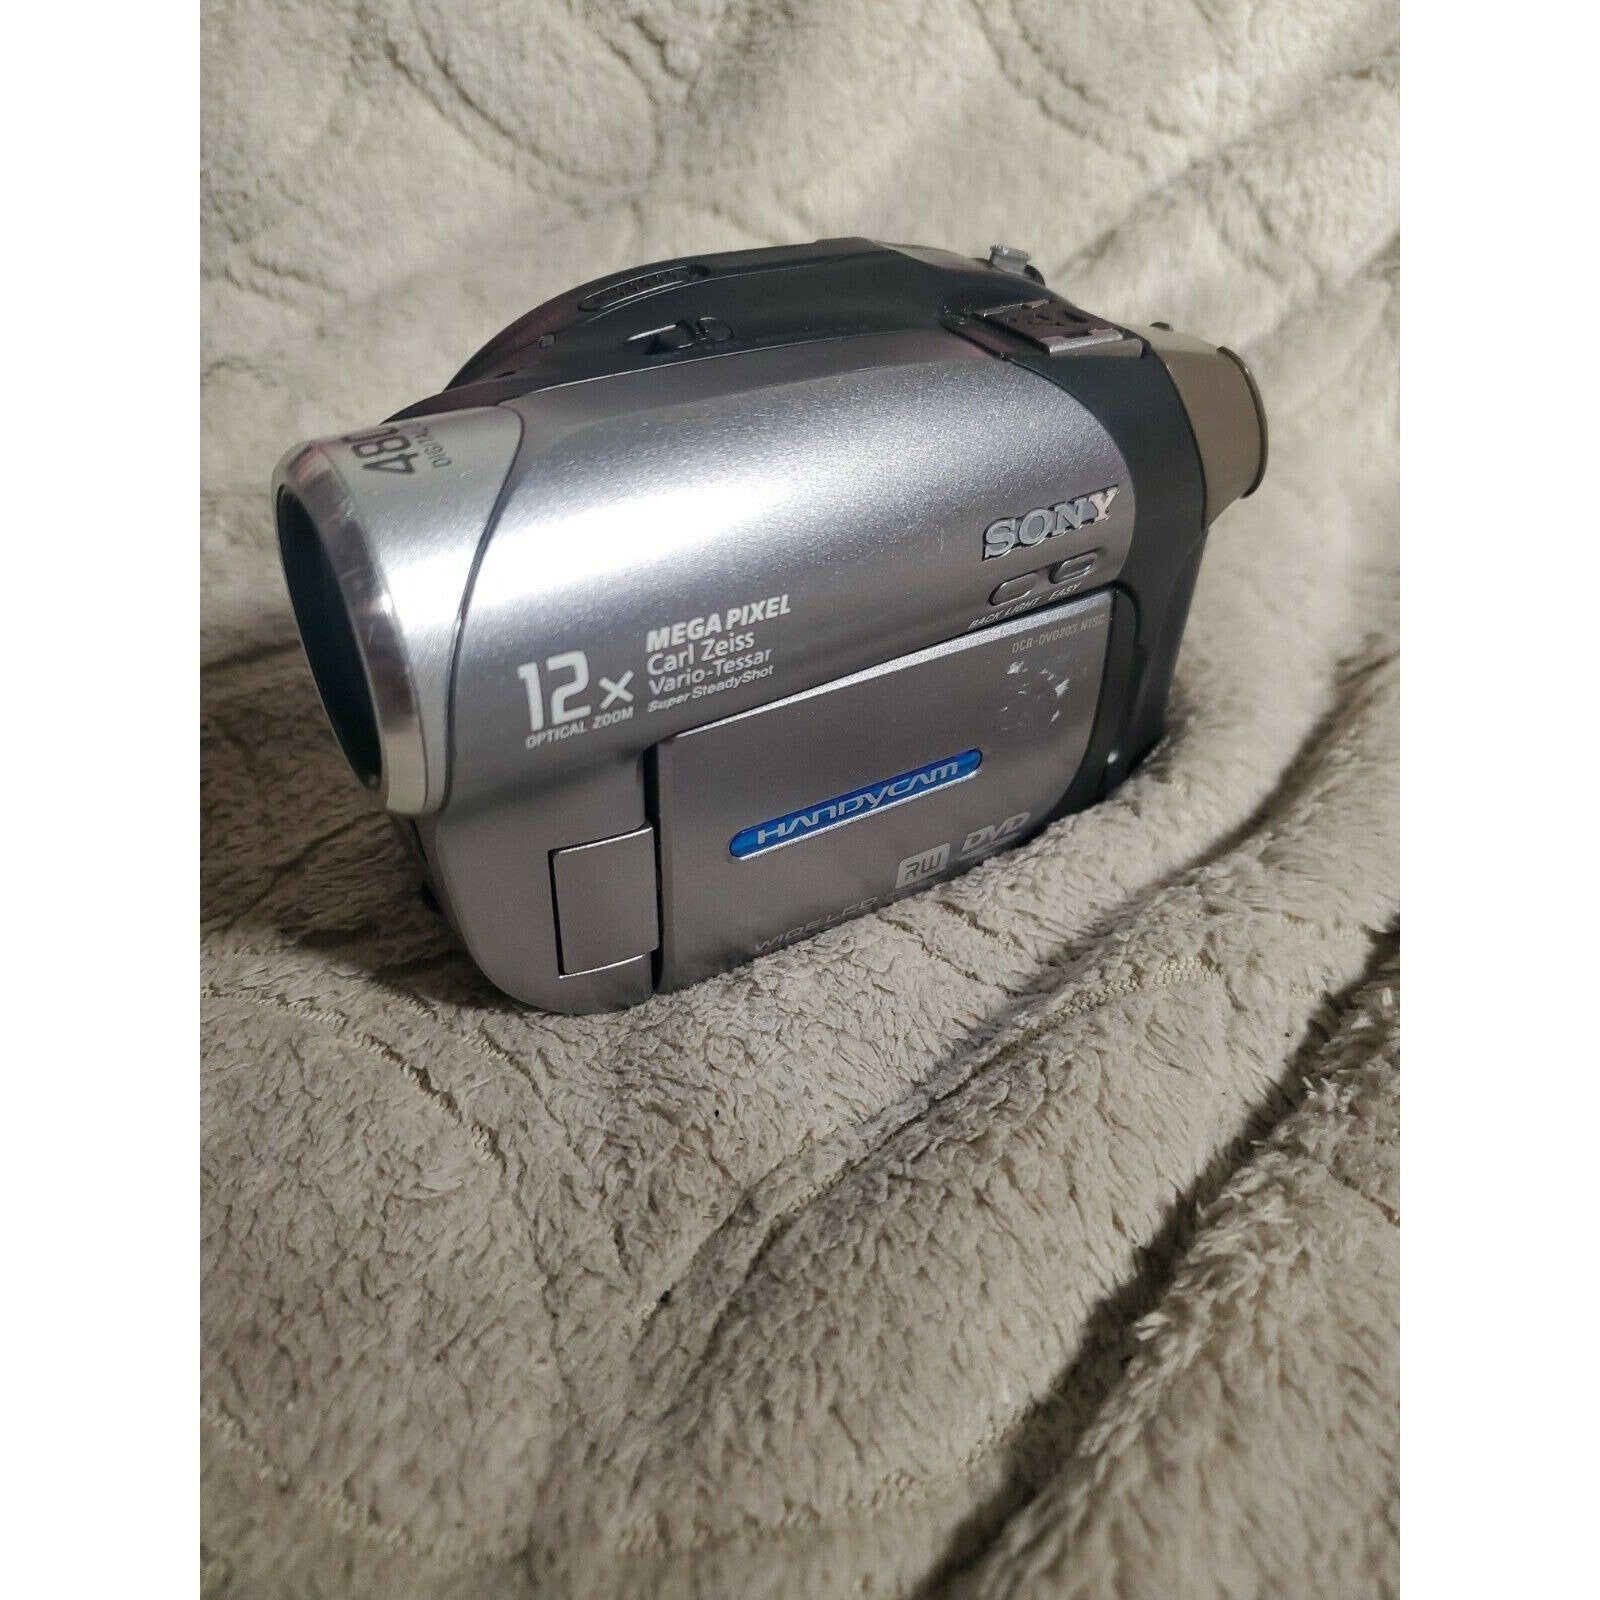 Sony HandyCam DCR-DVD203 Mini DVD Camcorder Nightshot 12x Optical Zoom